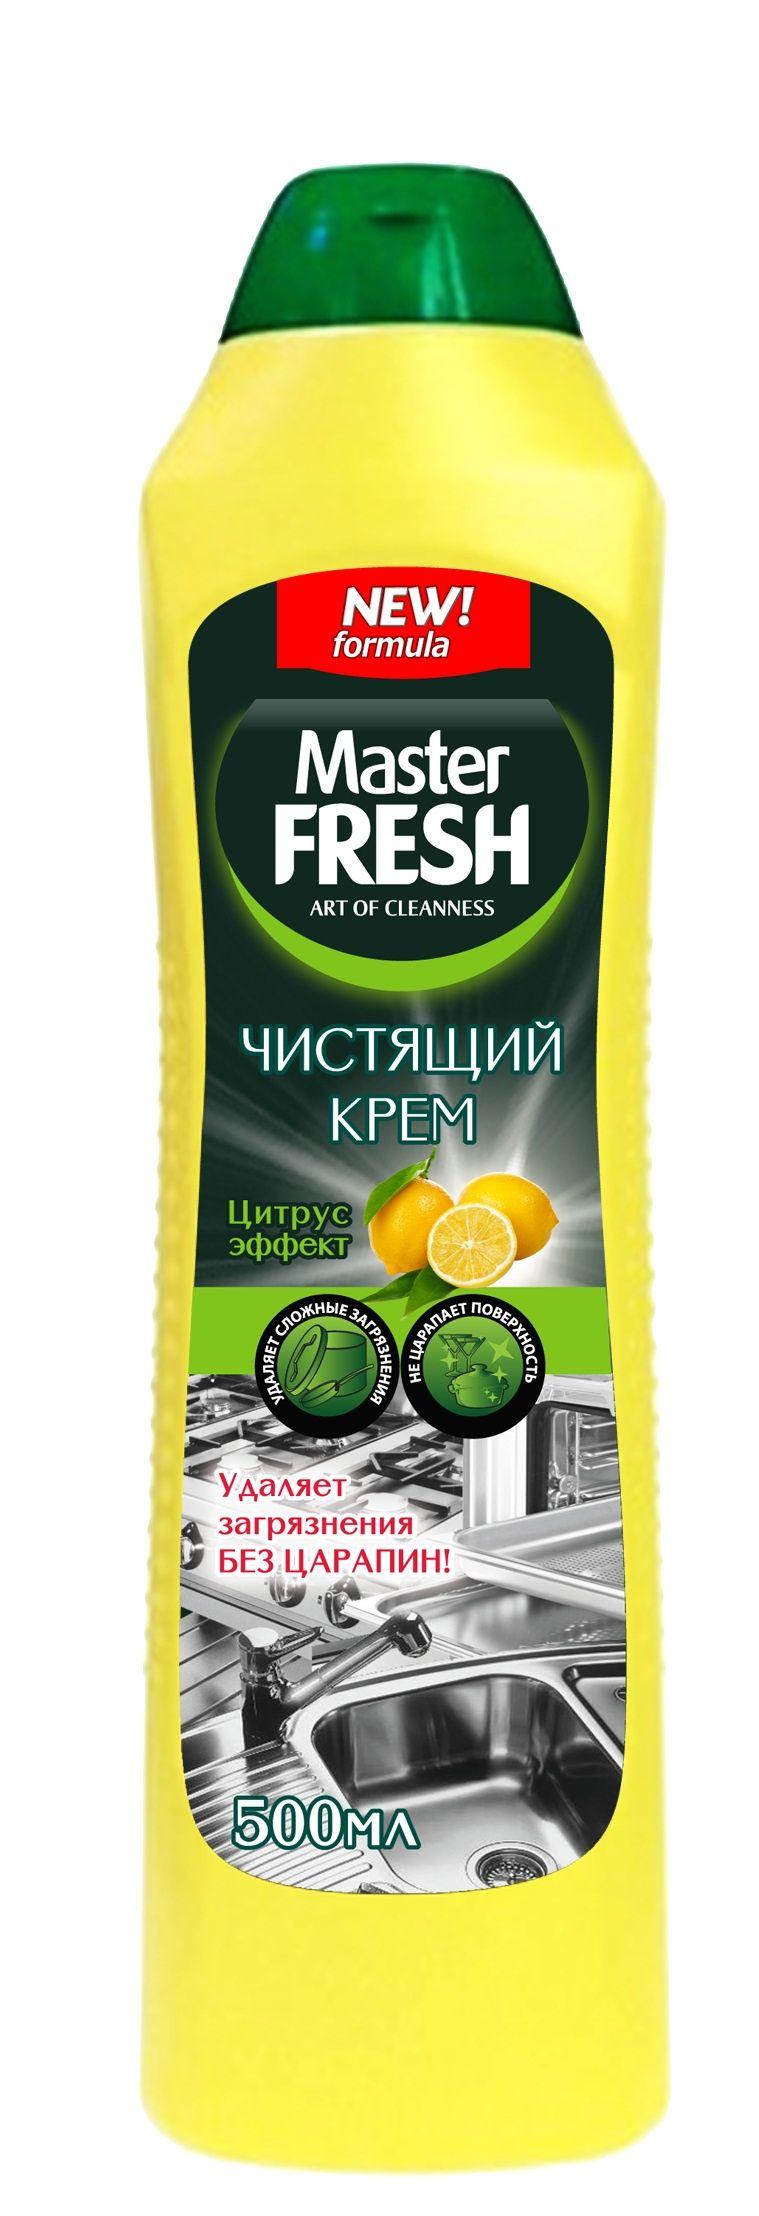 Чистящий крем Аромат Лимона, Master FRESH, 500 мл., ПЭТ